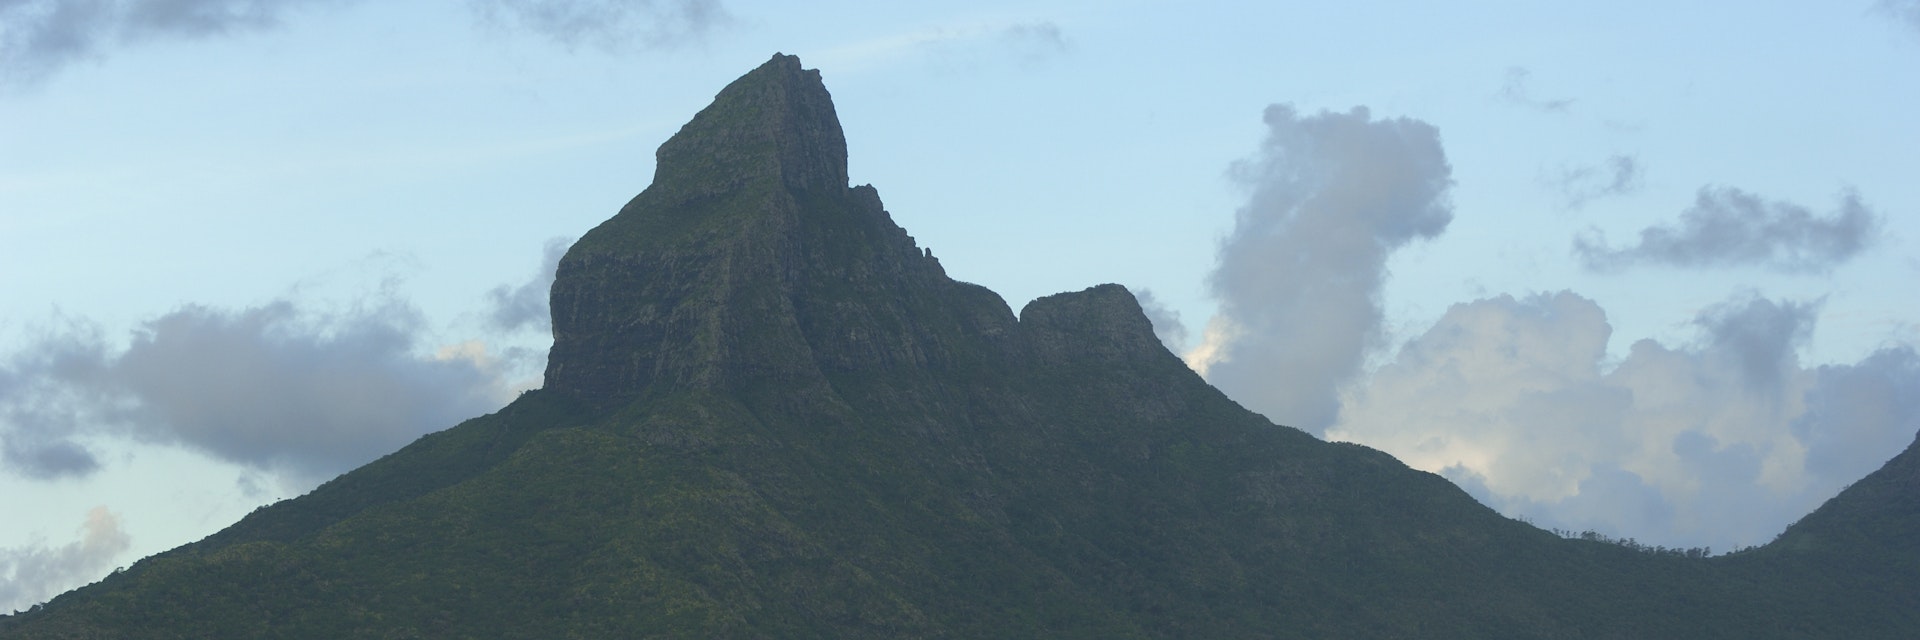 Mauritius island, West coast, Rampart mountain at Tamarin